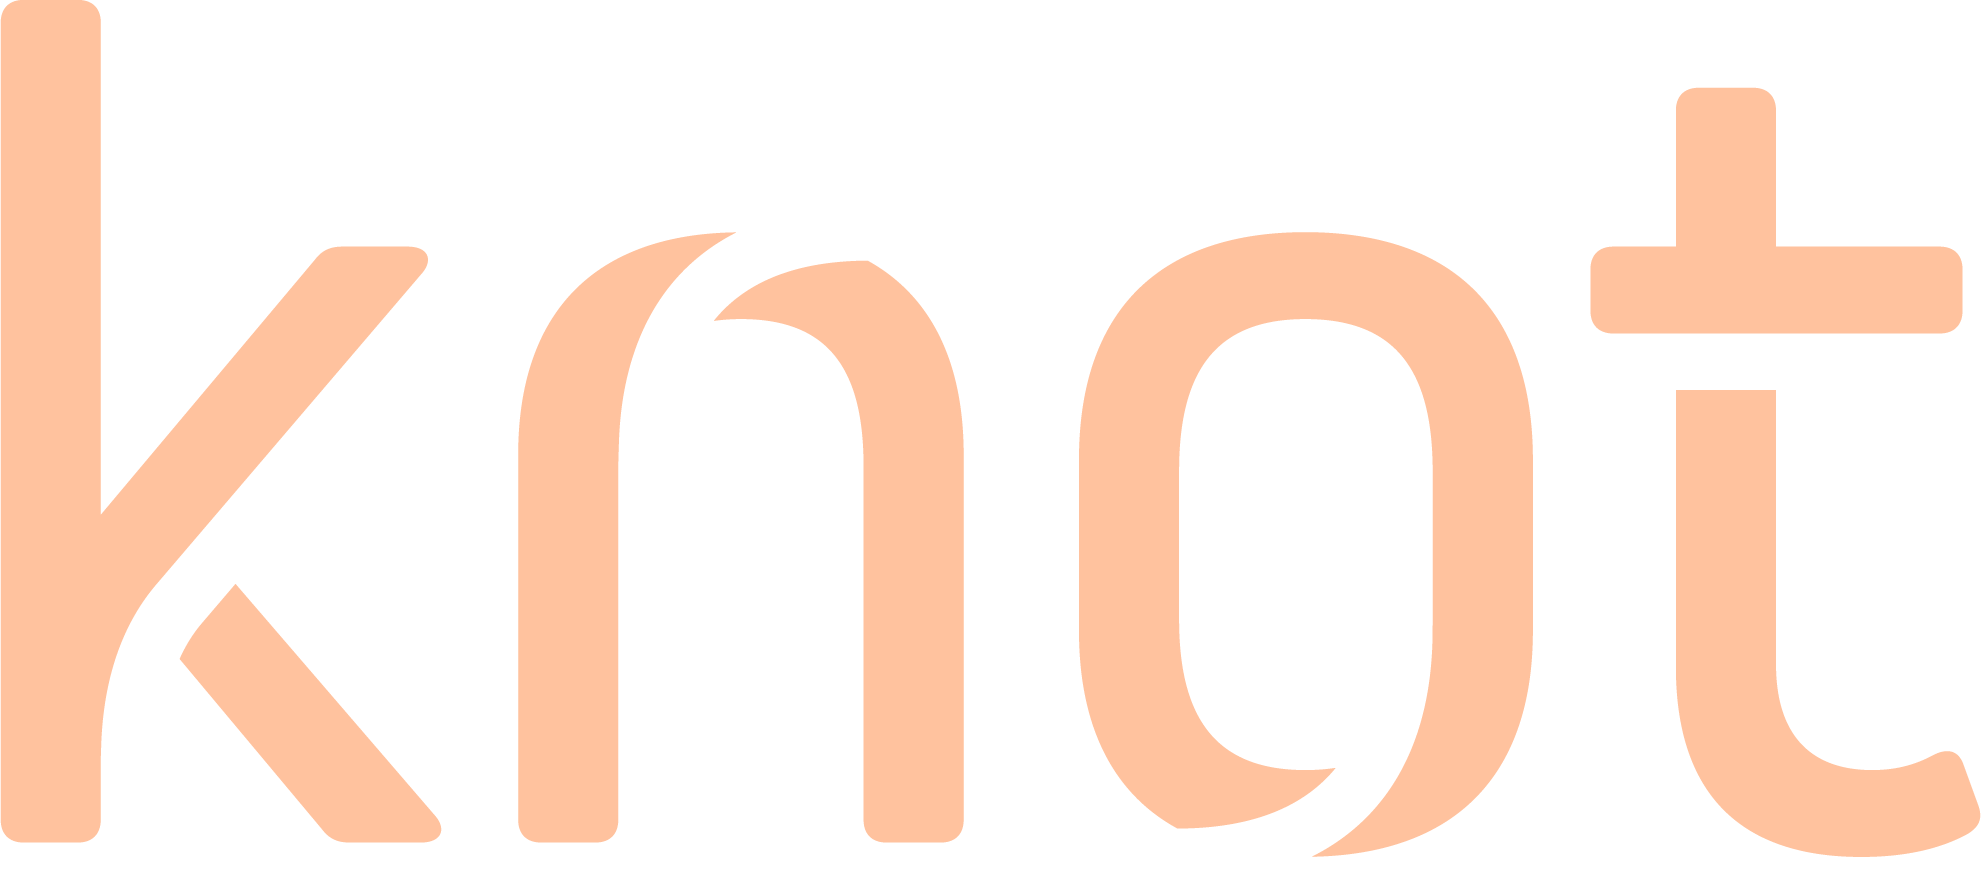 Knot logo